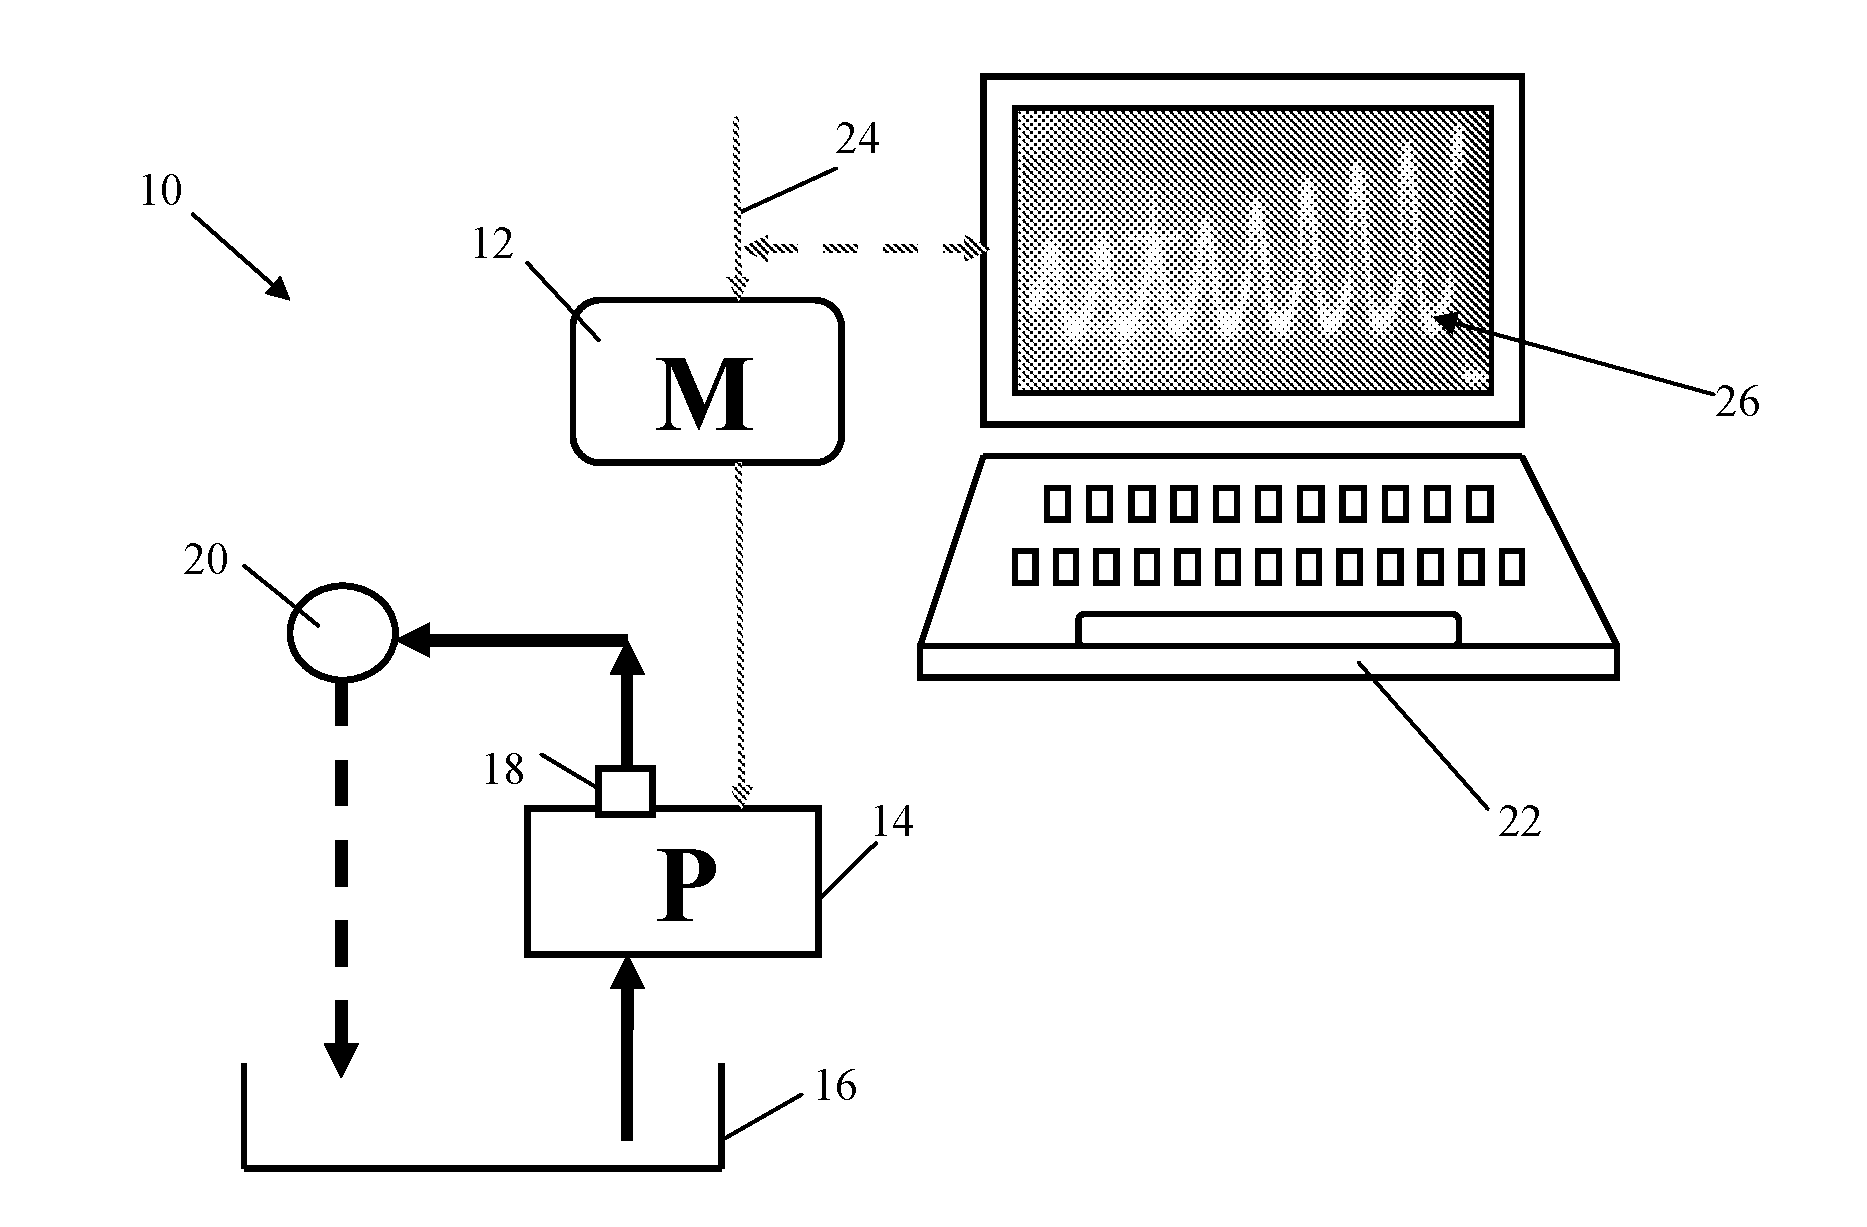 System, method & computer program product